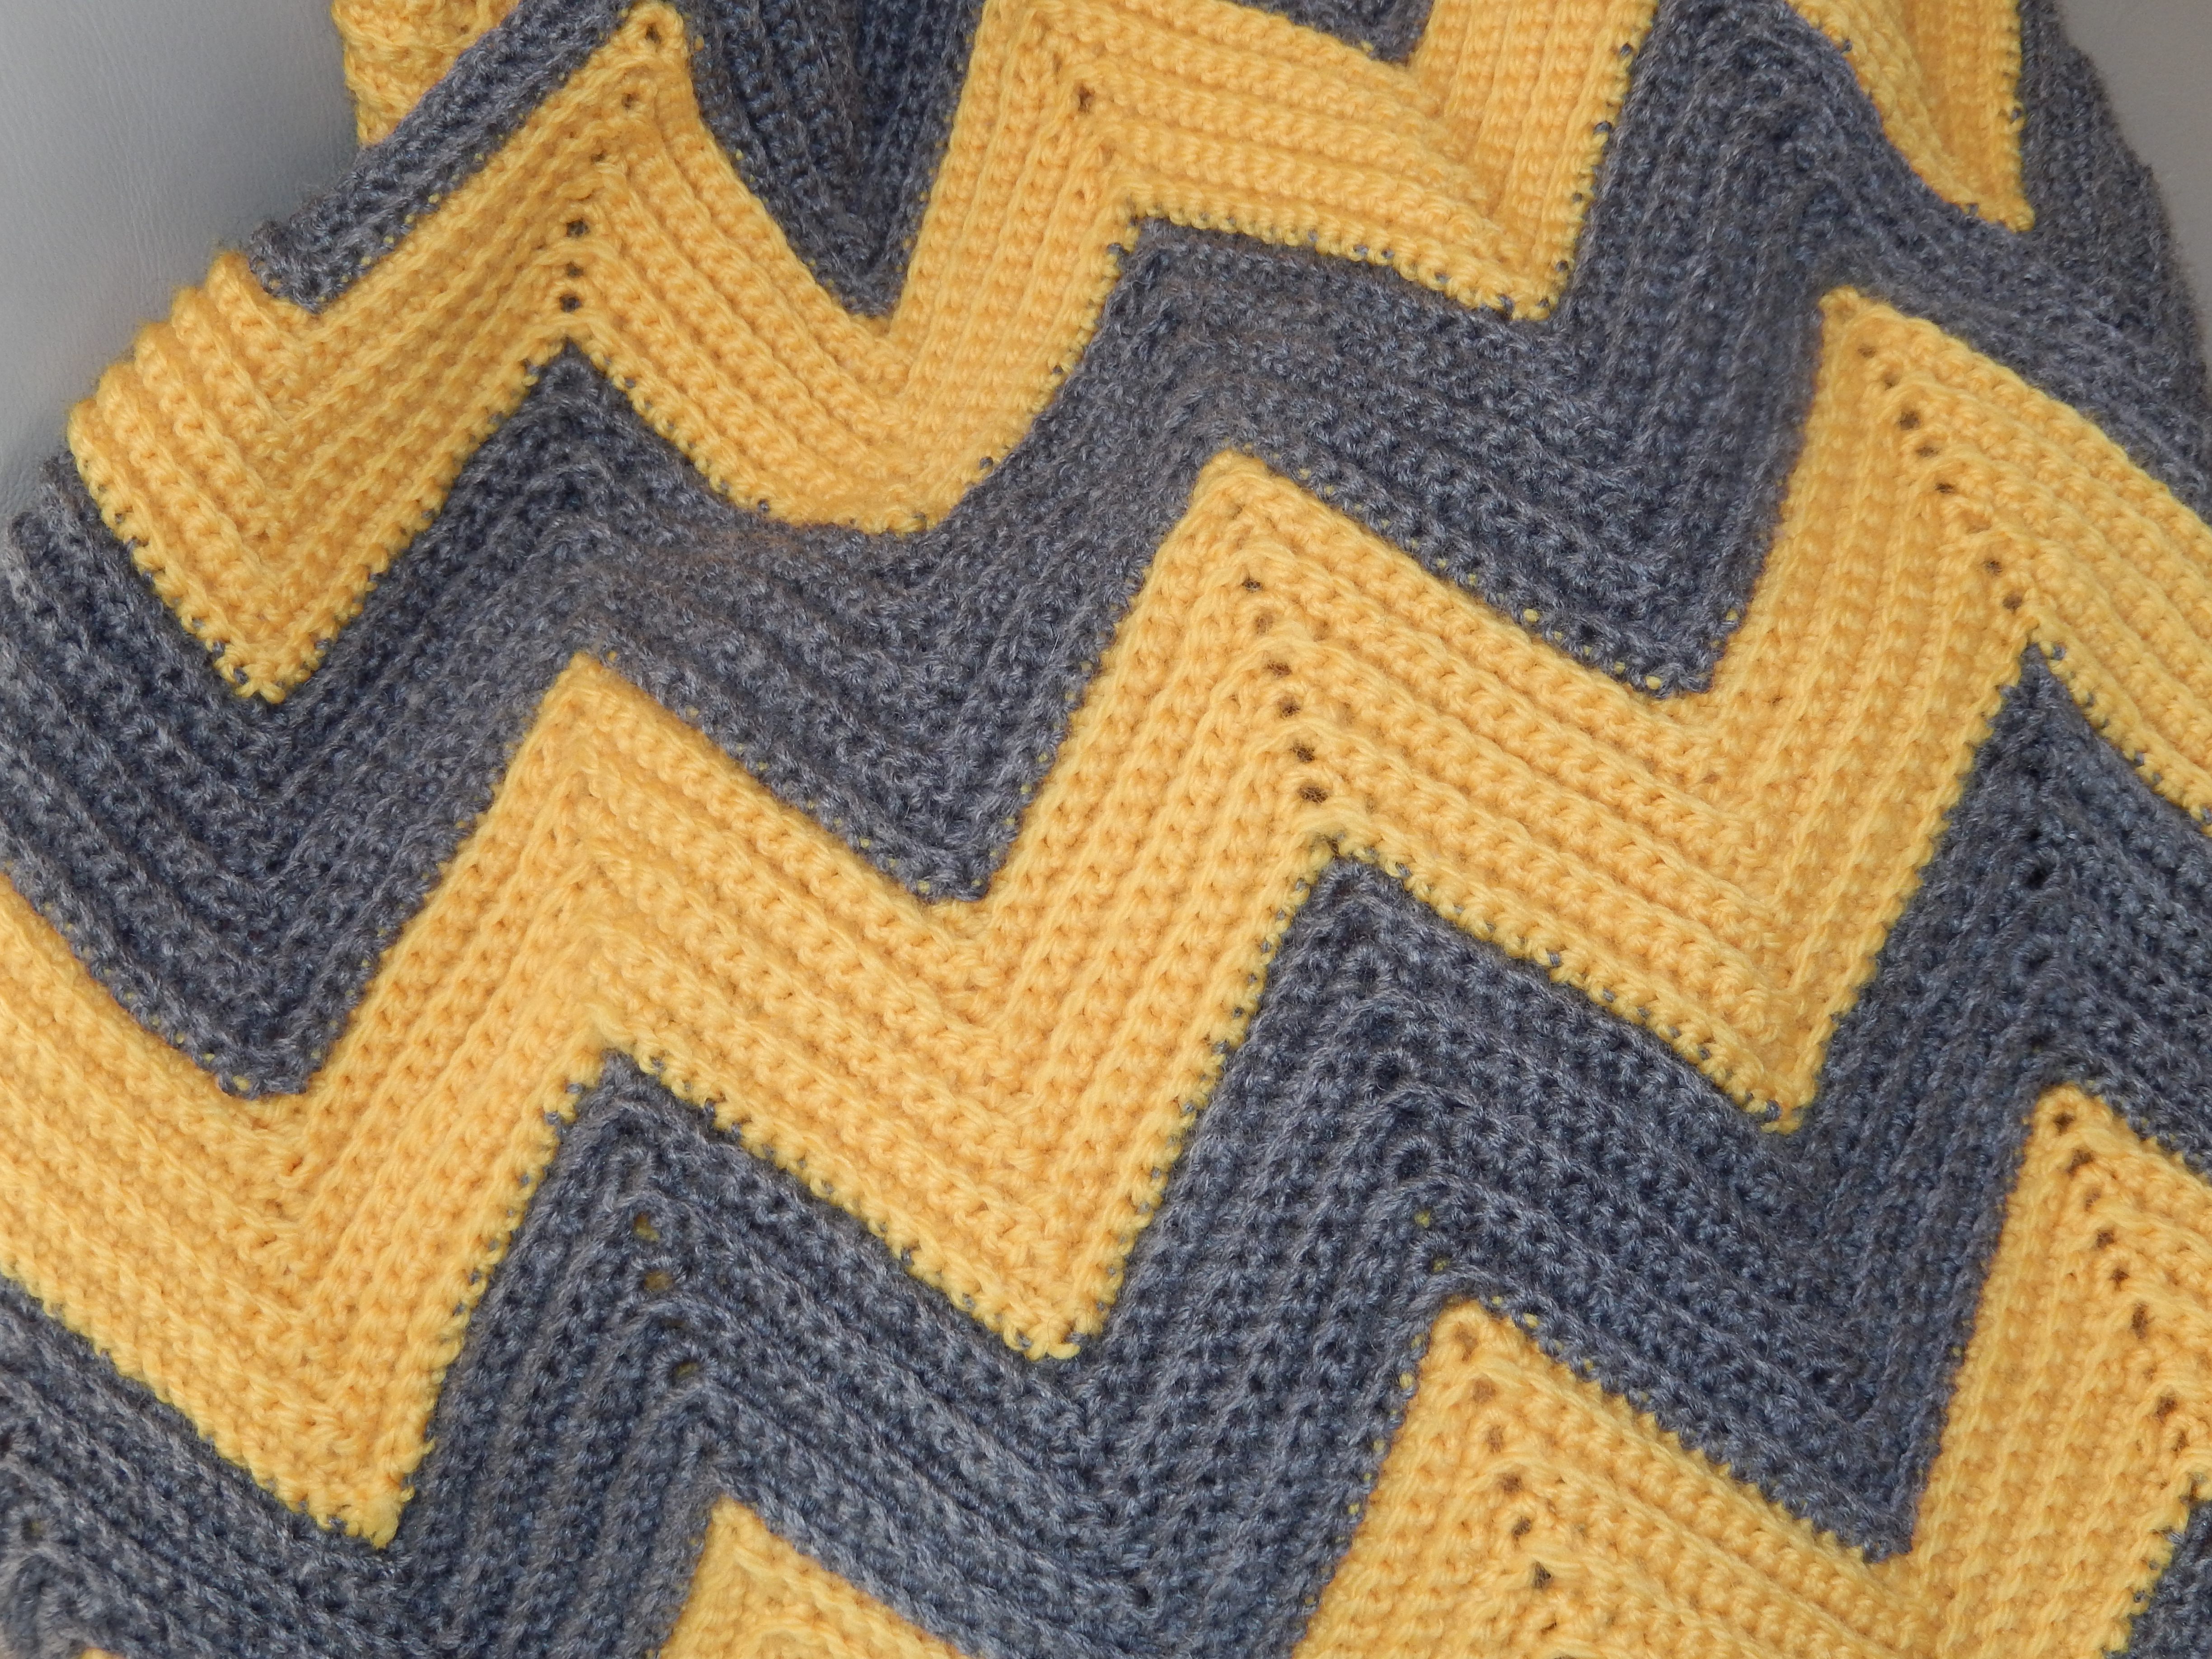 Crochet Ripple Afghan Patterns Chevron Blanket Free Crochet Pattern Gippsland Granny